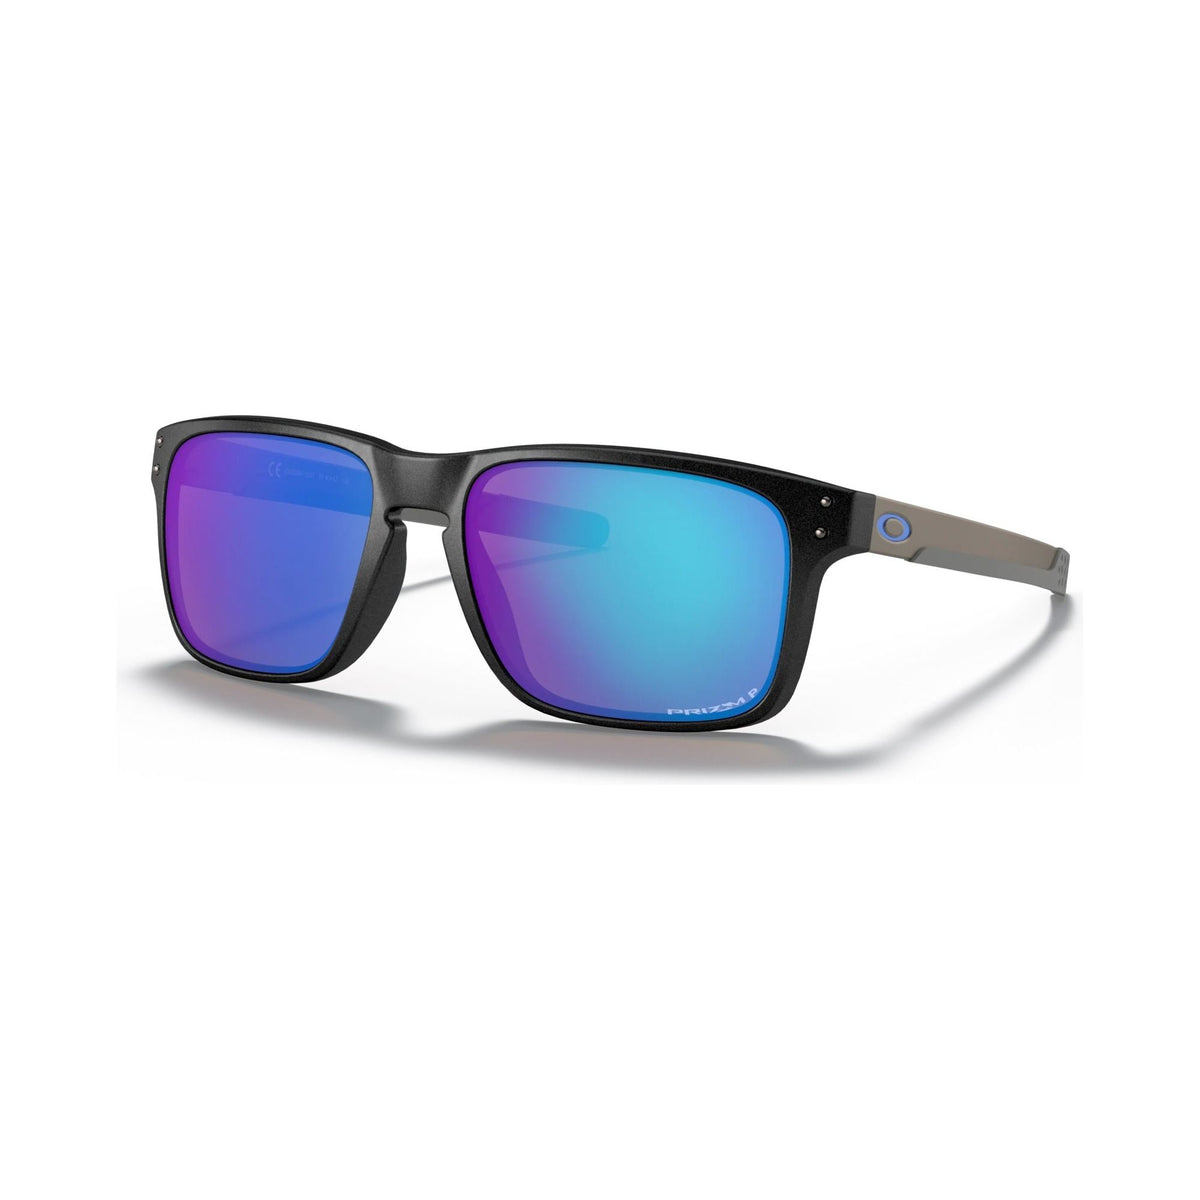 Academy Sports + Outdoors Oakley Holbrook XL UVA/UVB Sunglasses